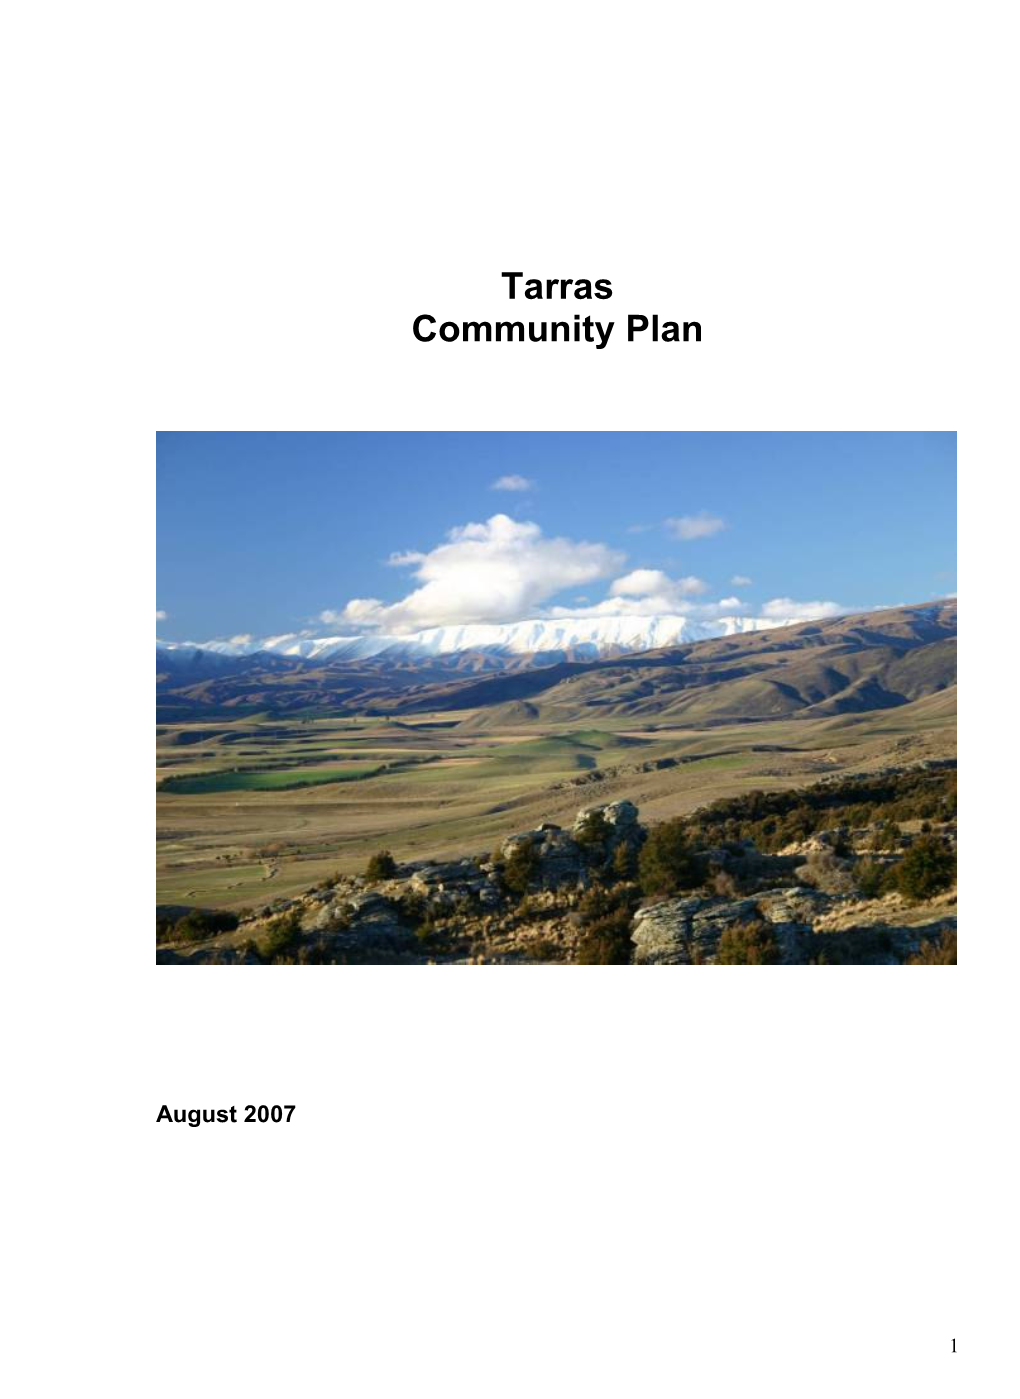 Tarras Community Plan